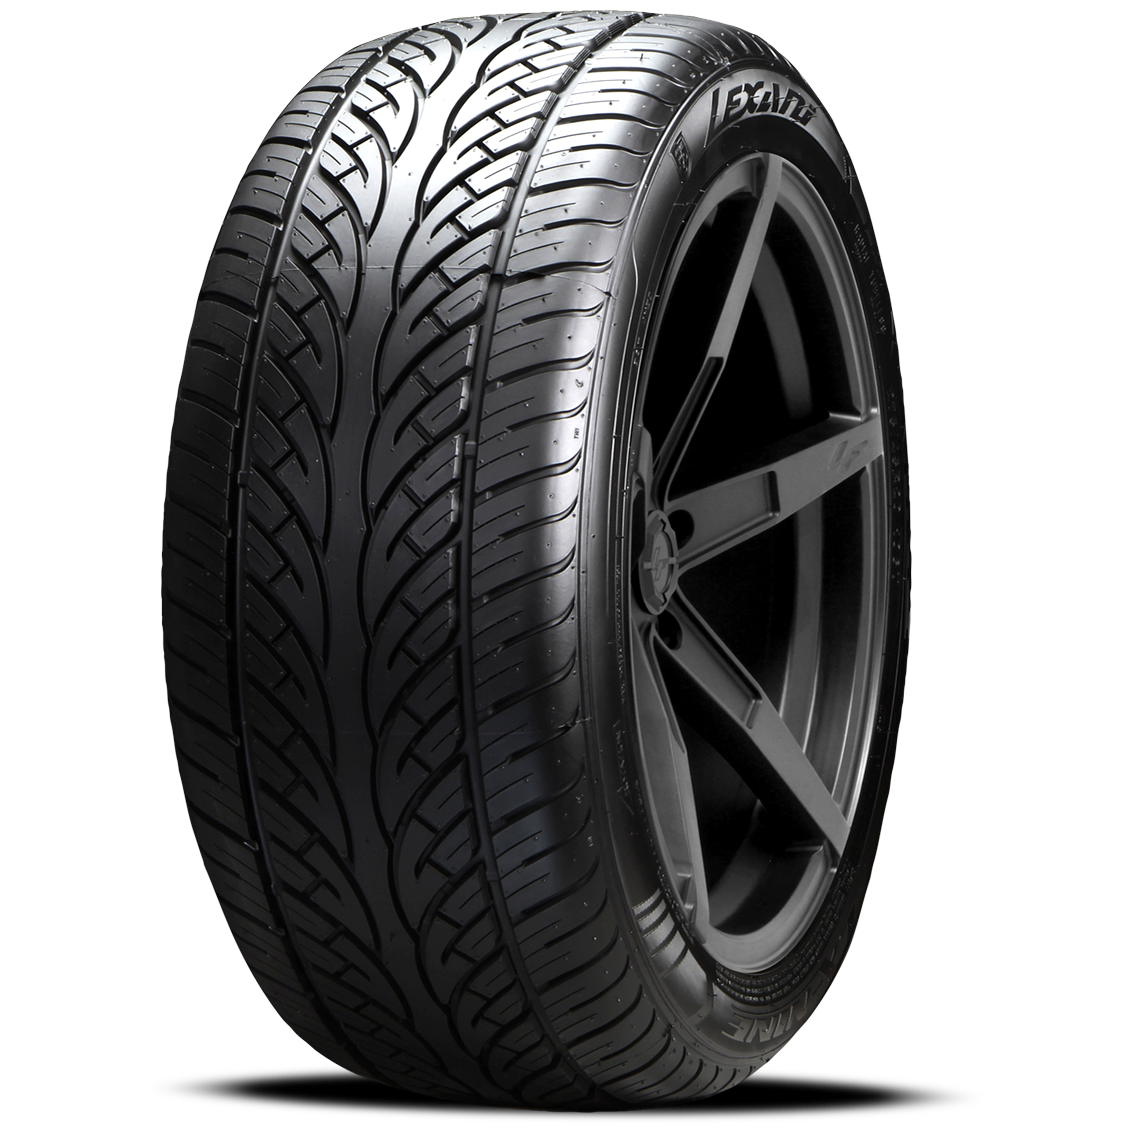 LEXANI LX-NINE 275/30ZR24 (30.6X10.9R 24) Tires